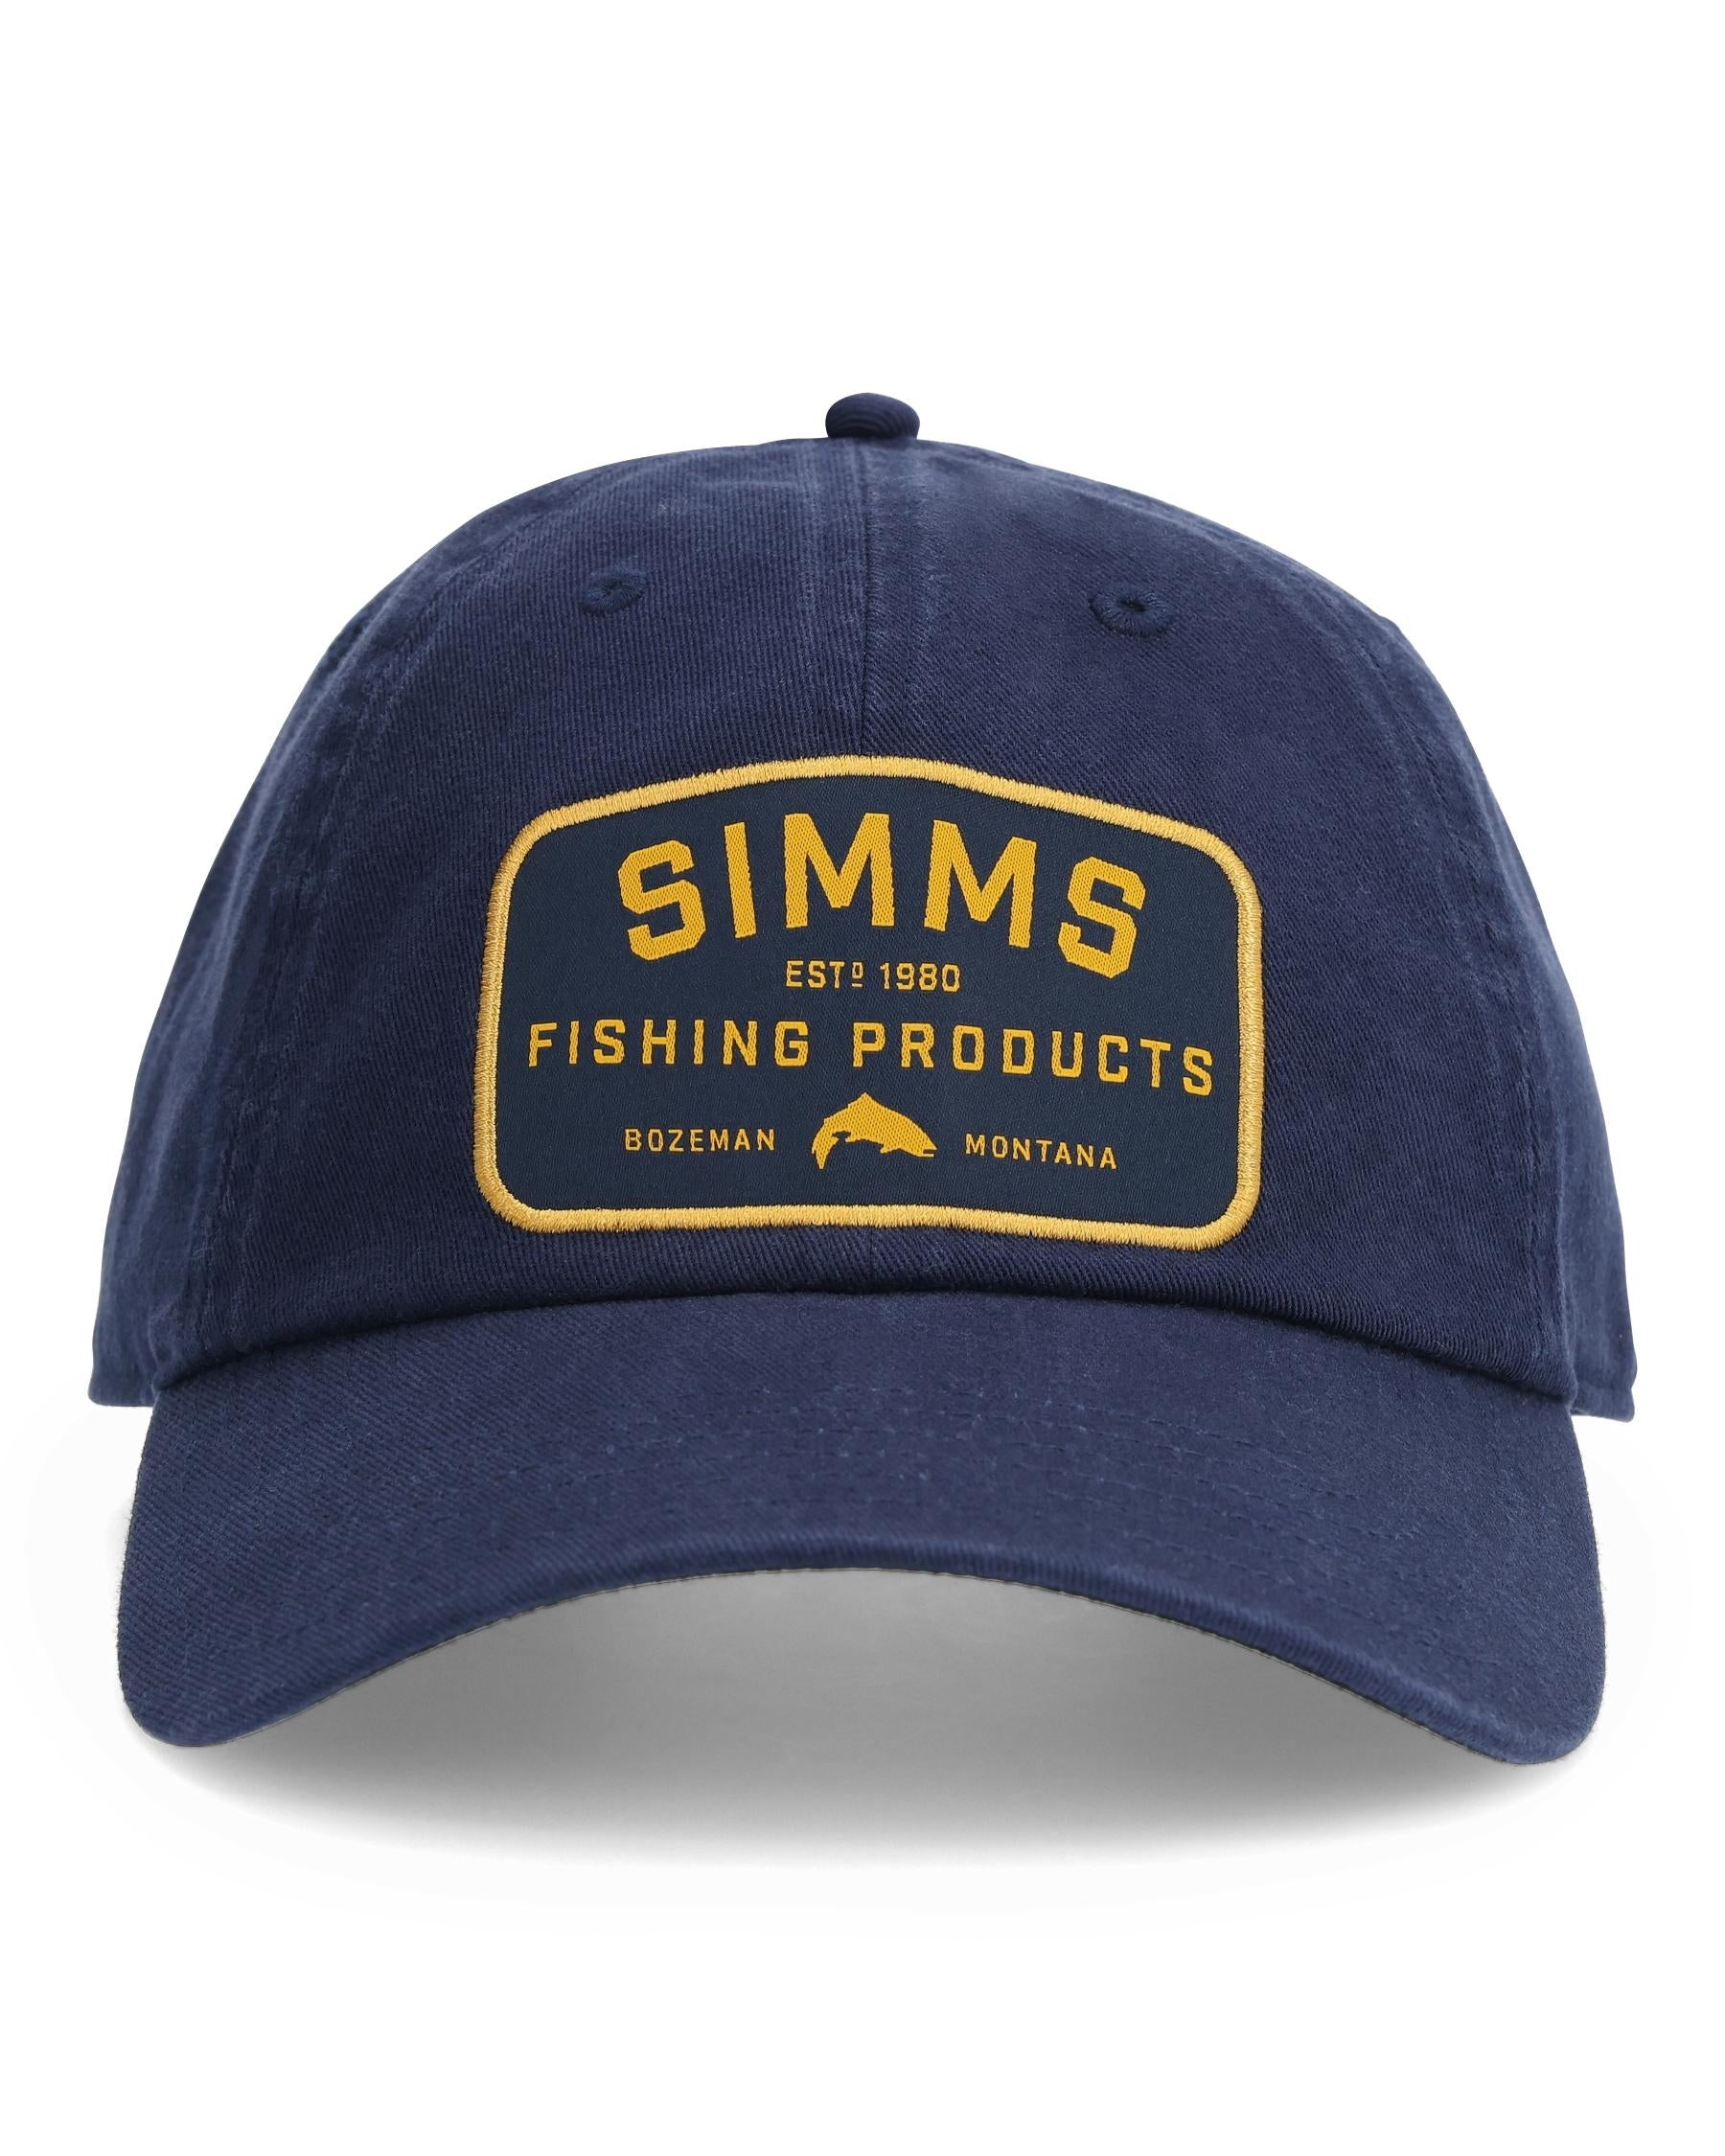 Single Haul Cap | Simms Fishing Products